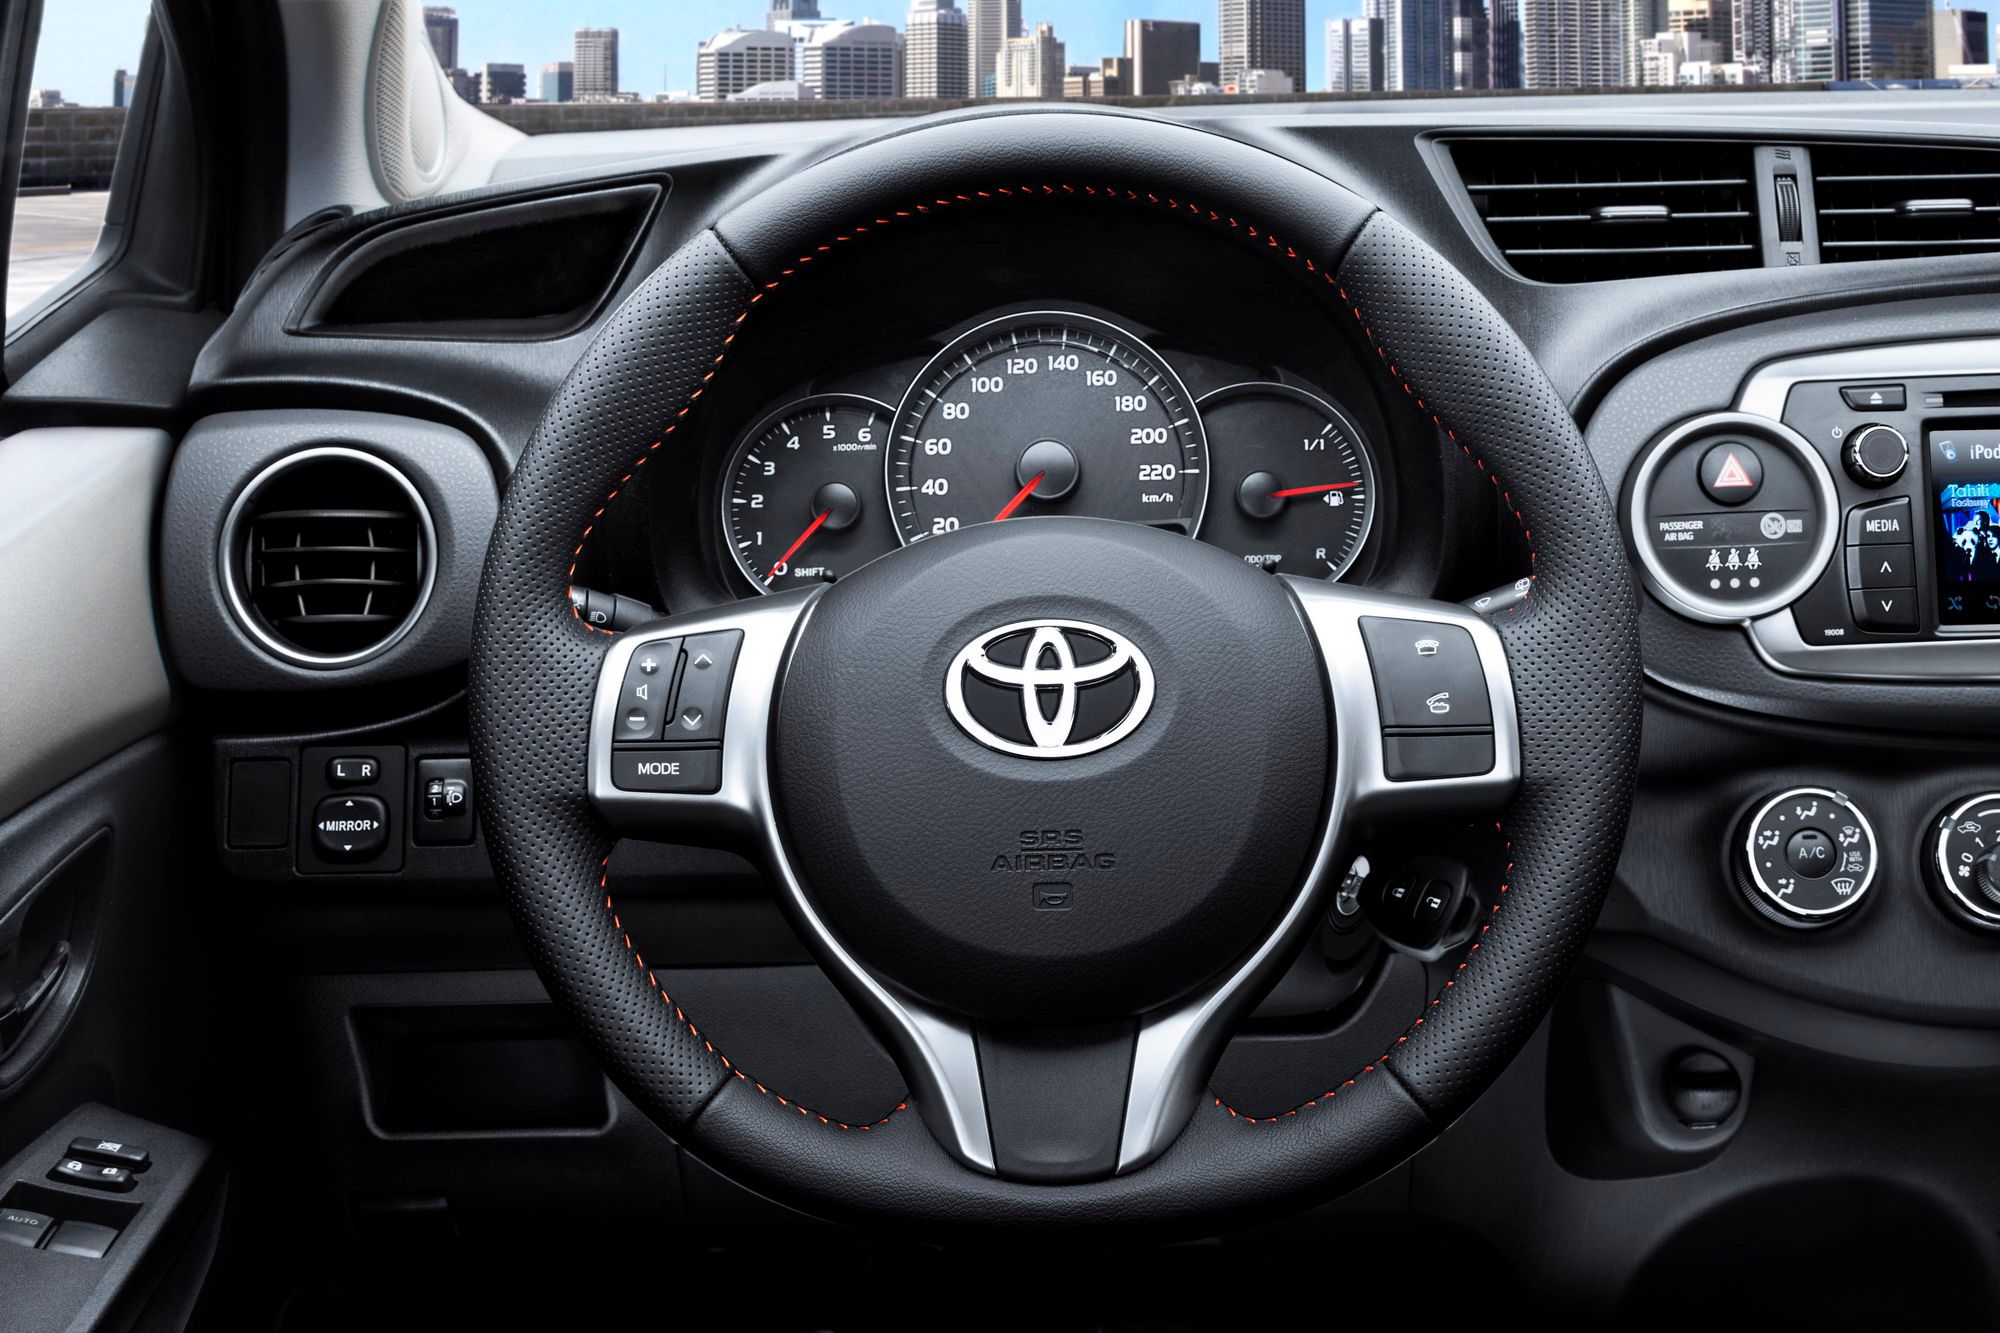 2012 Toyota Yaris